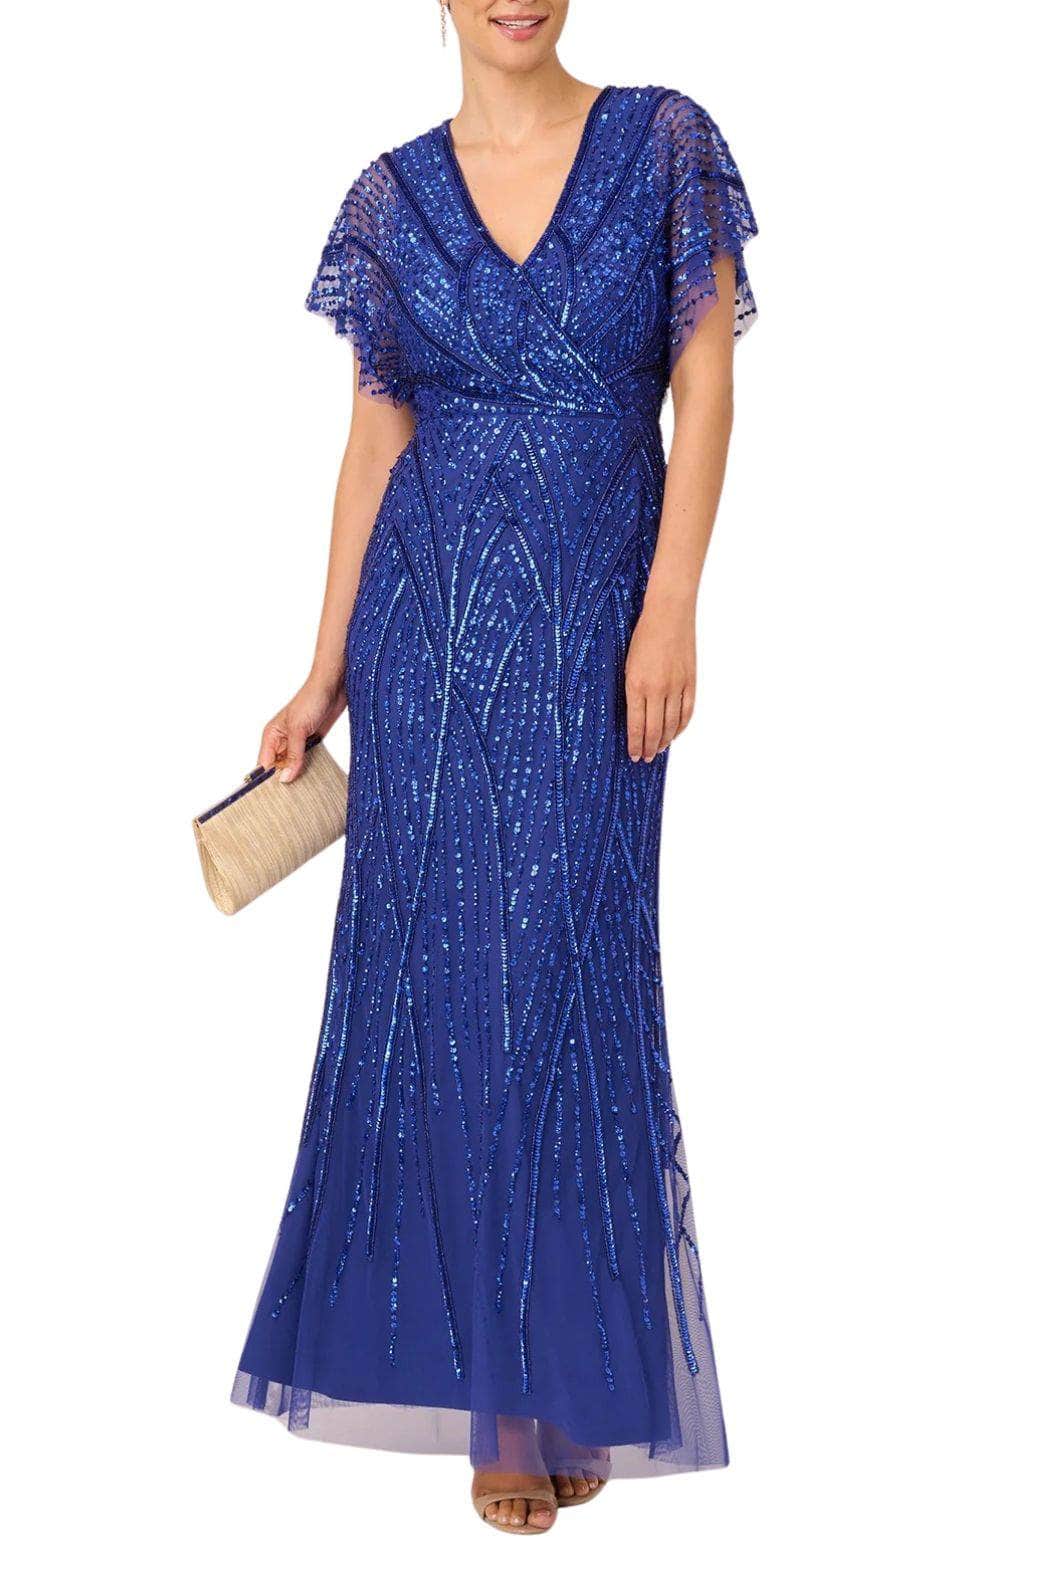 Image of Adrianna Papell AP1E210884 P - Dolman Sleeve Jeweled Evening Dress